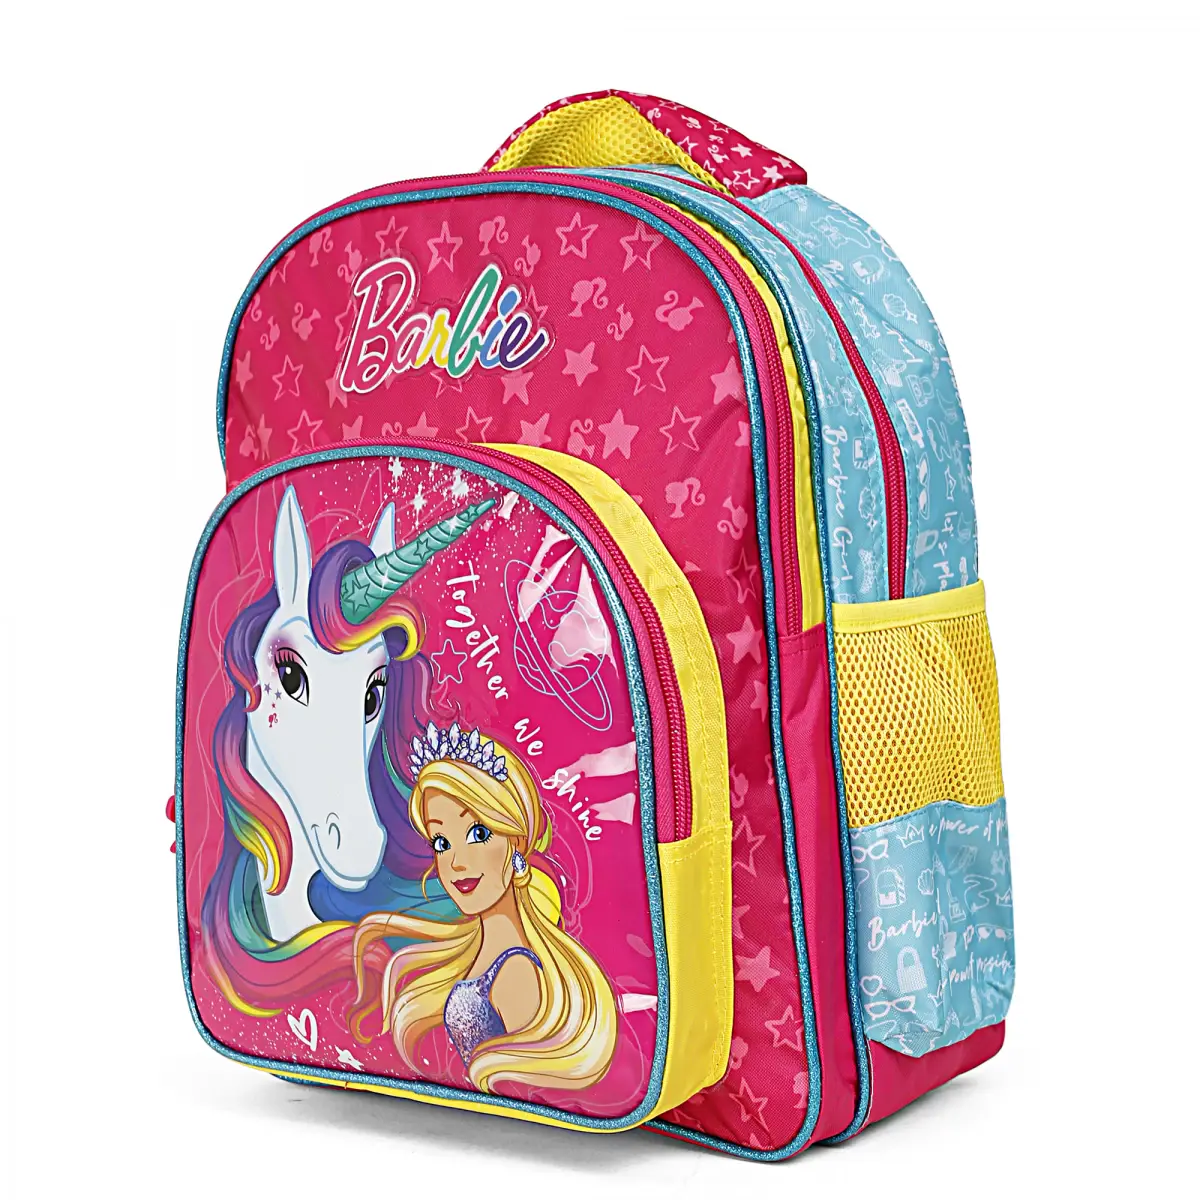 Barbie Unicorn Bag Pack, 14Inches, Multicolour